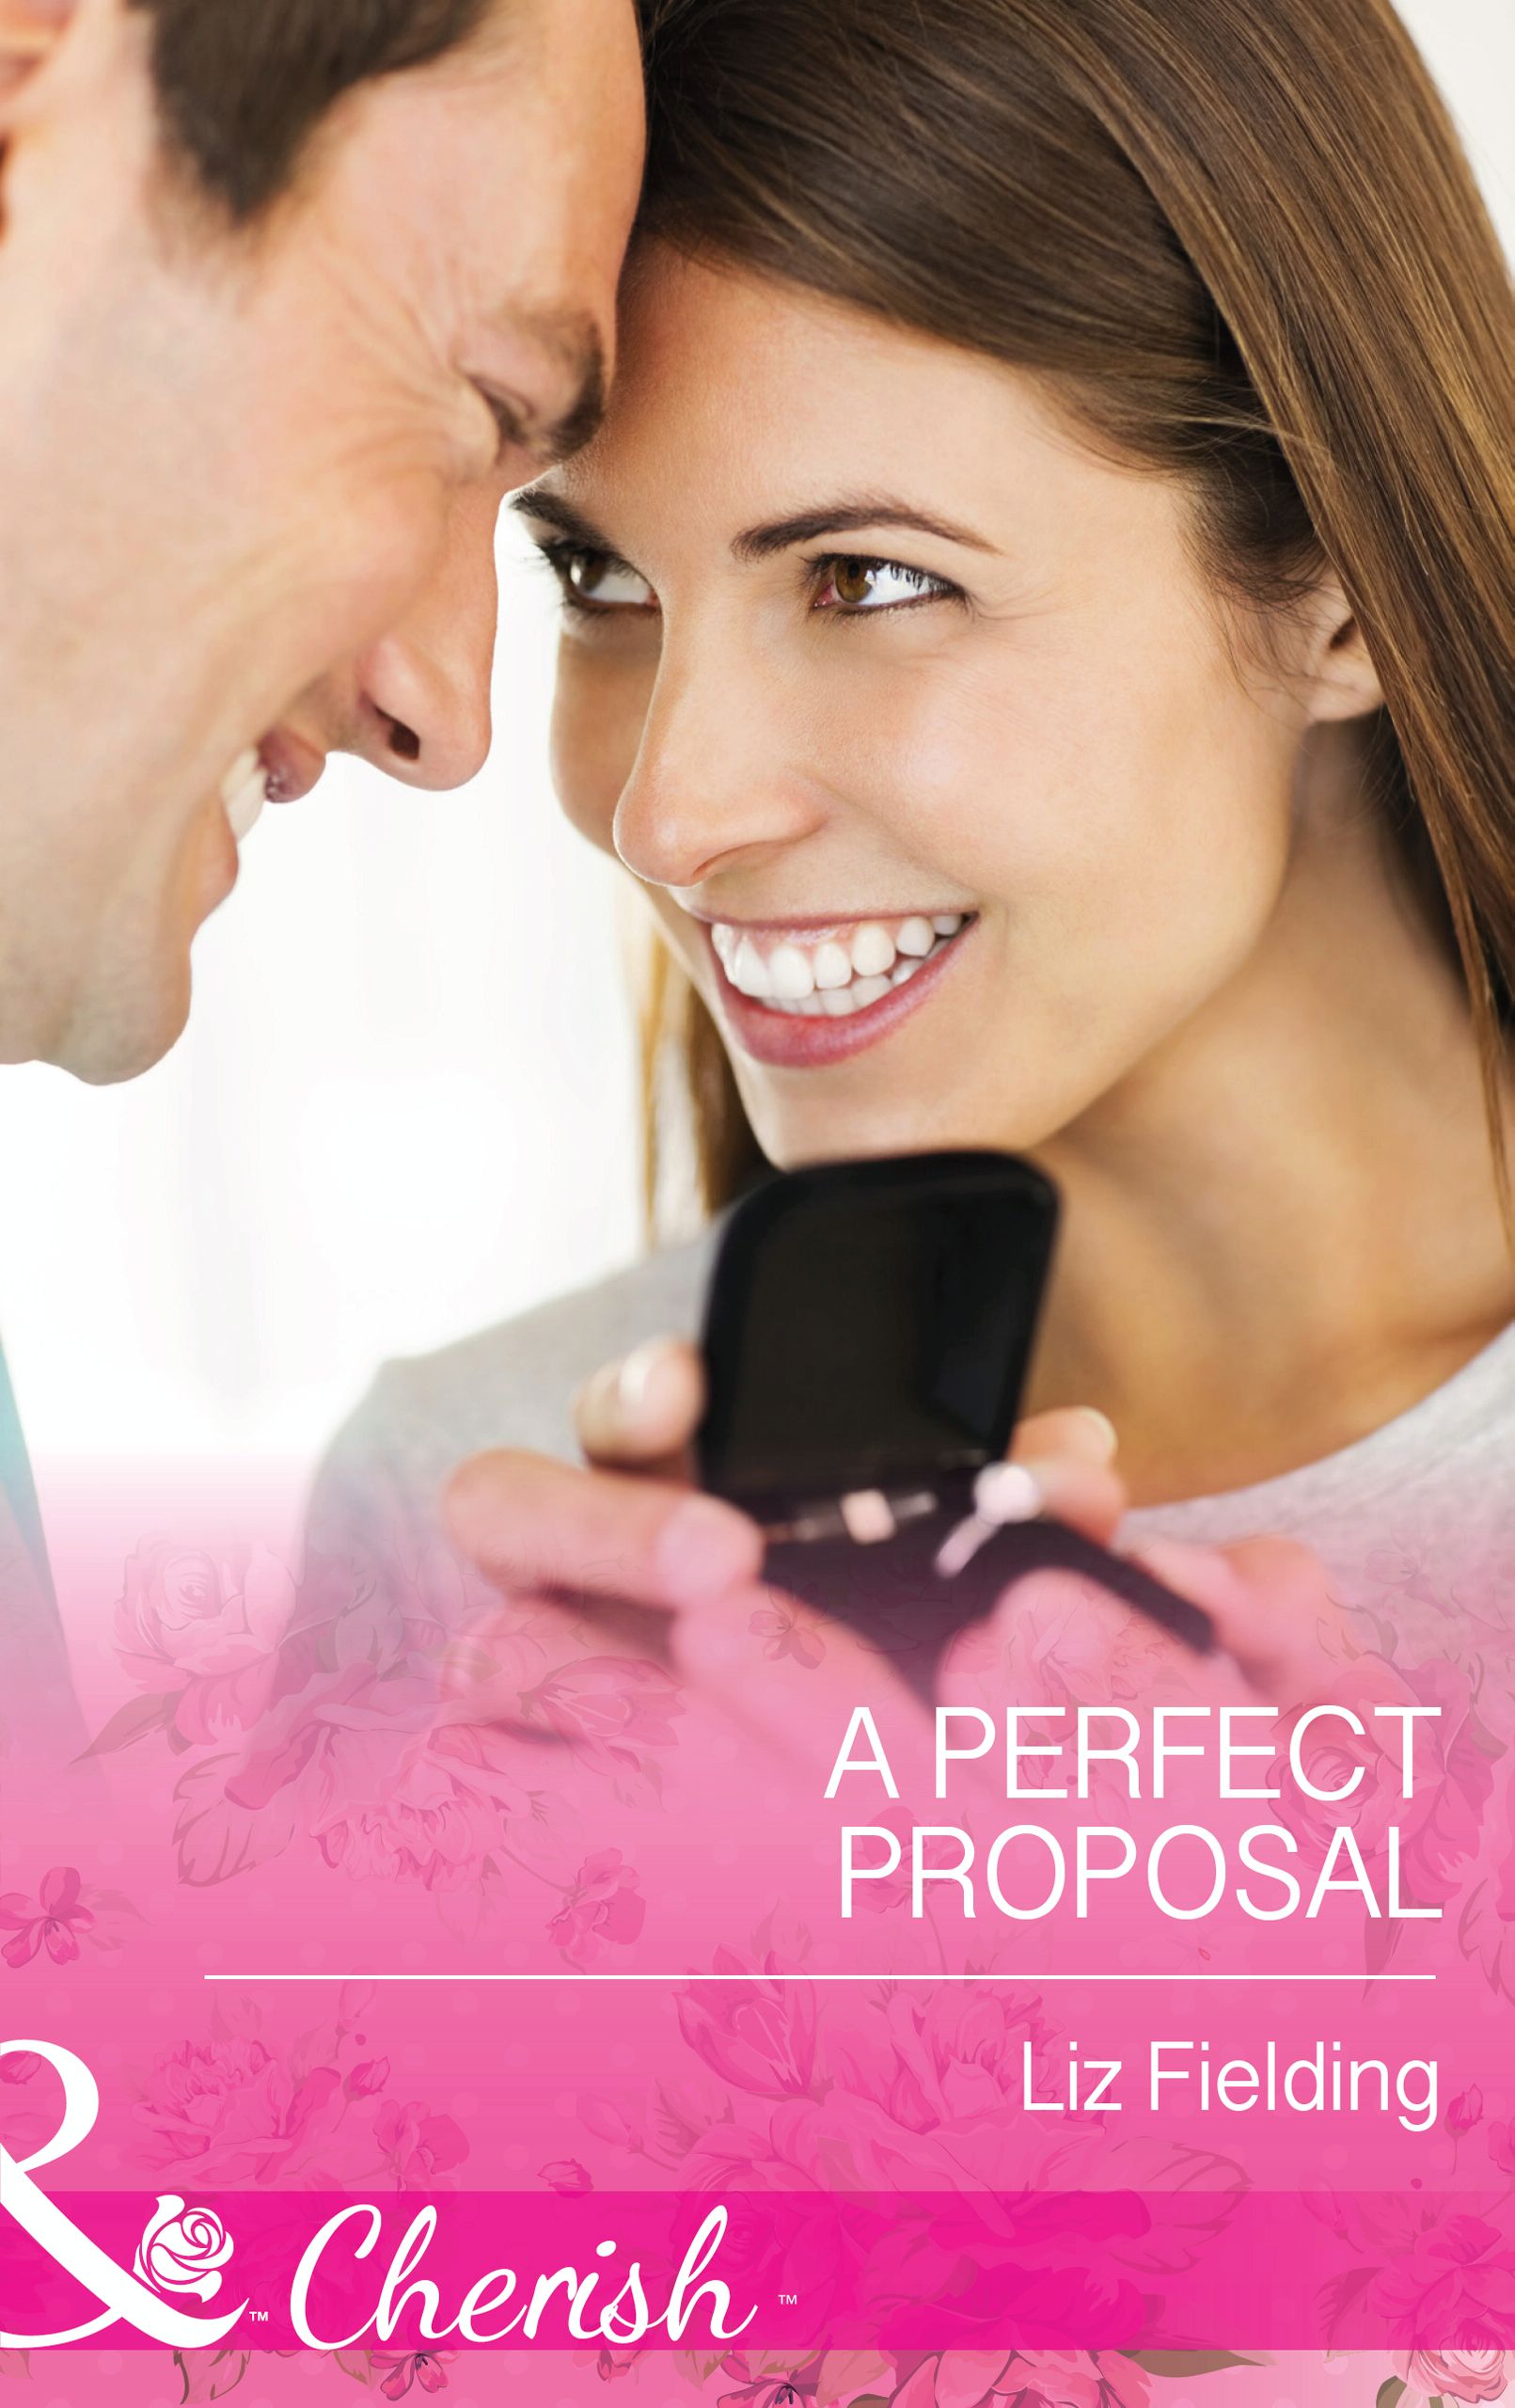 Perfect propose 4. Perfect proposal TLC. A perfect proposal.